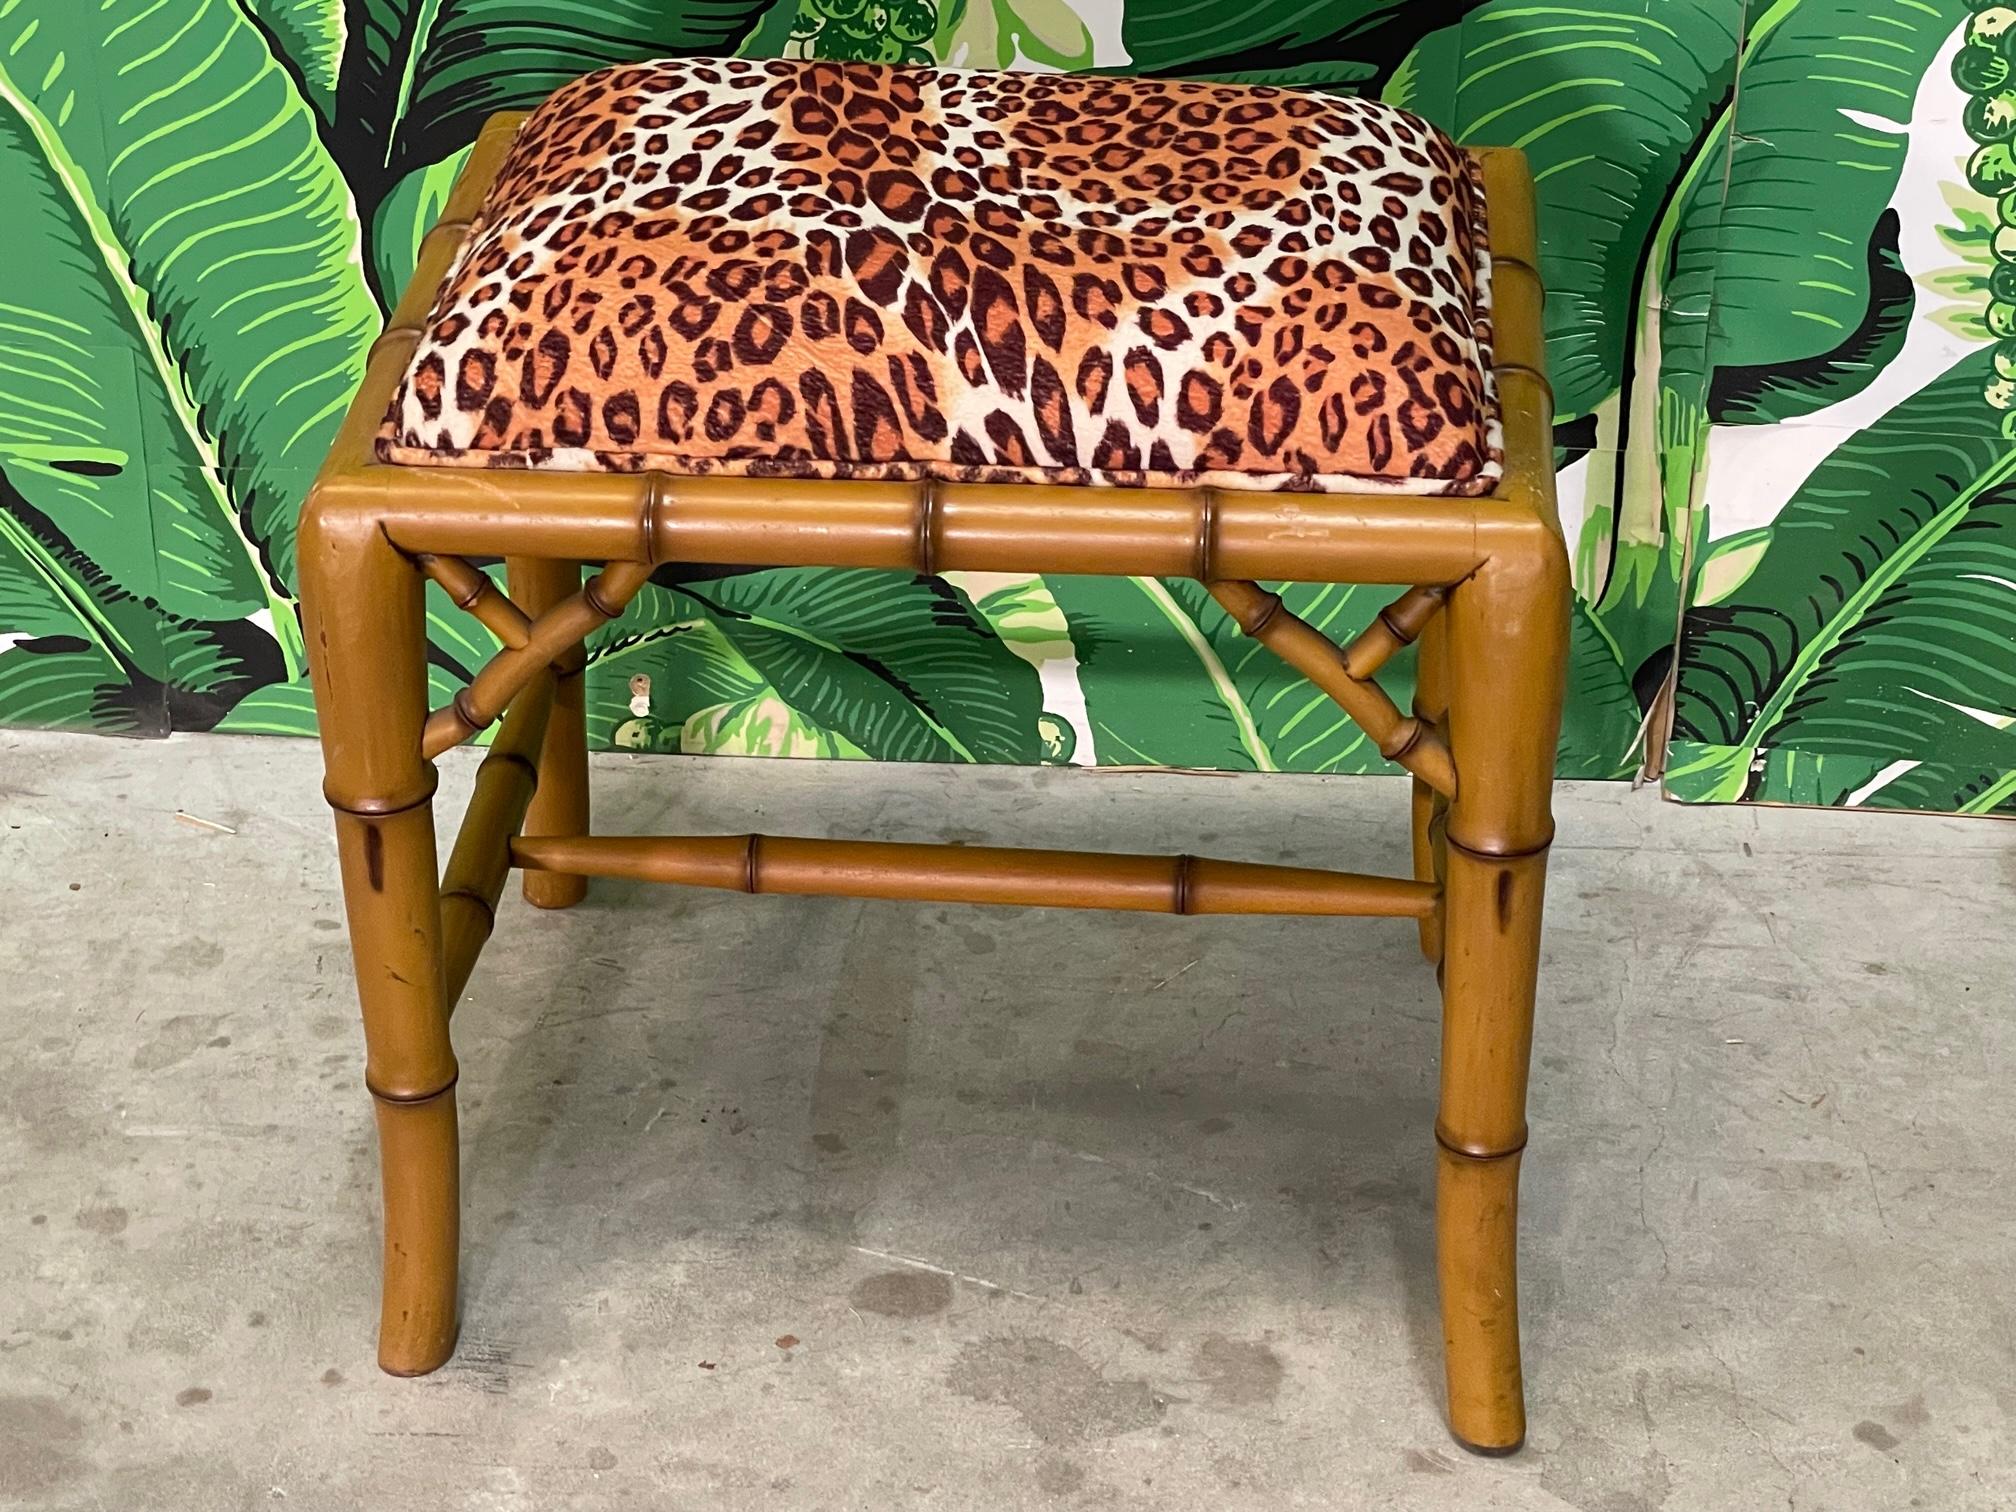 leopard footstool